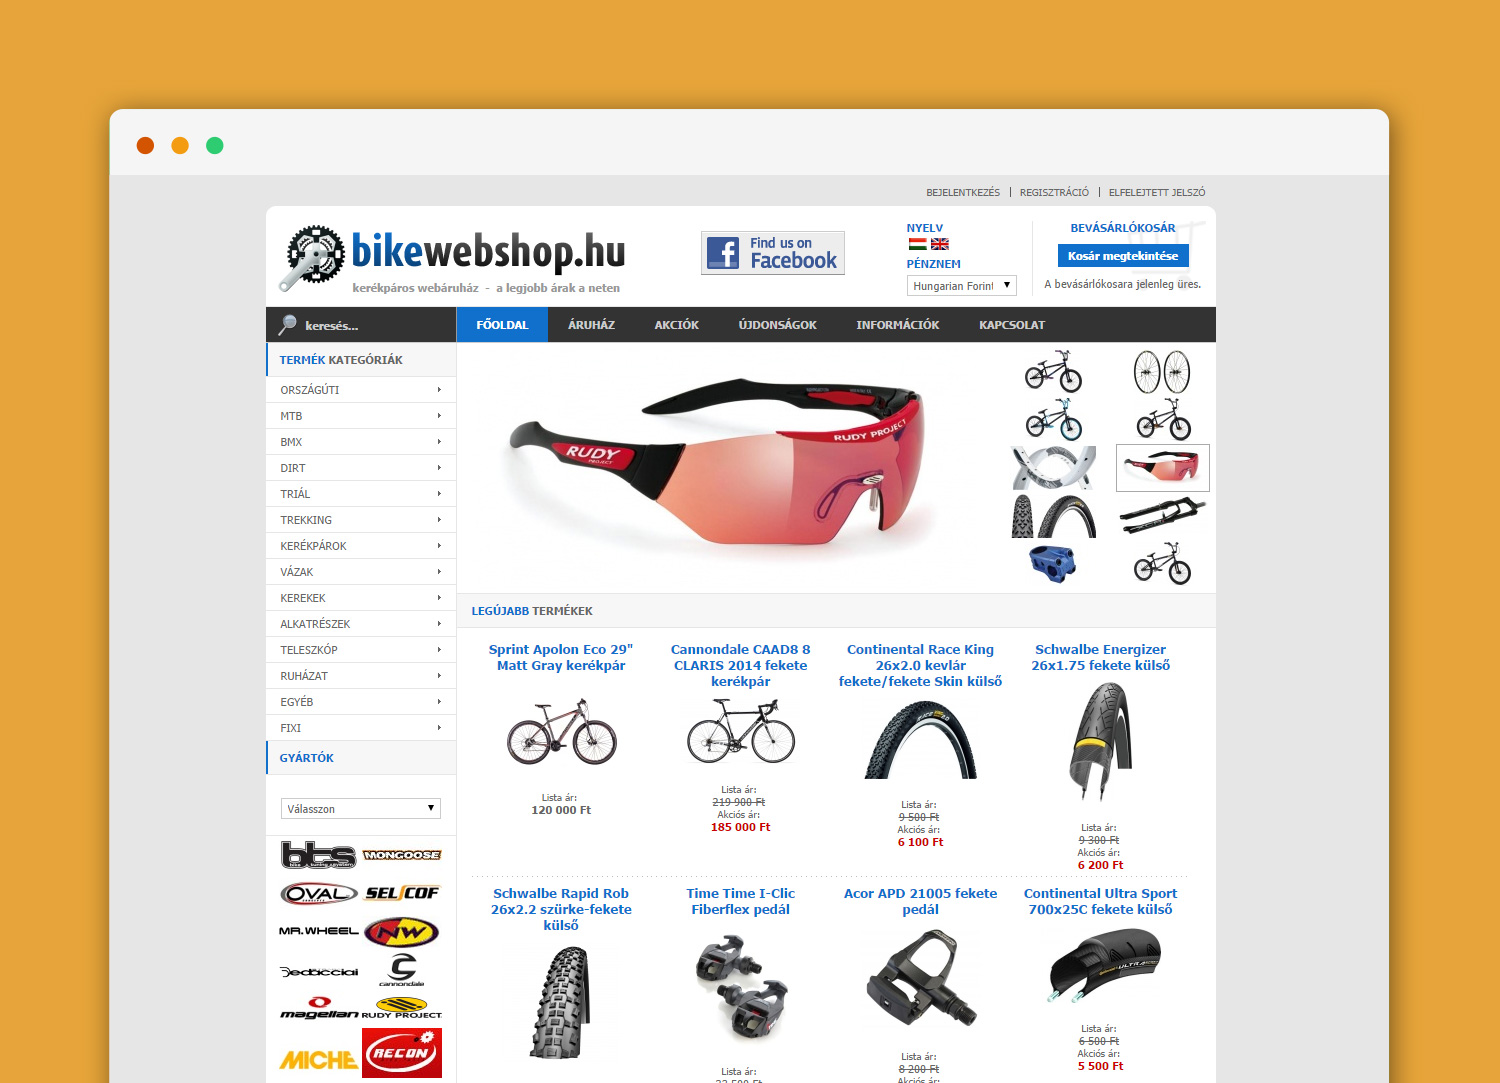 bikewebshop.hu website